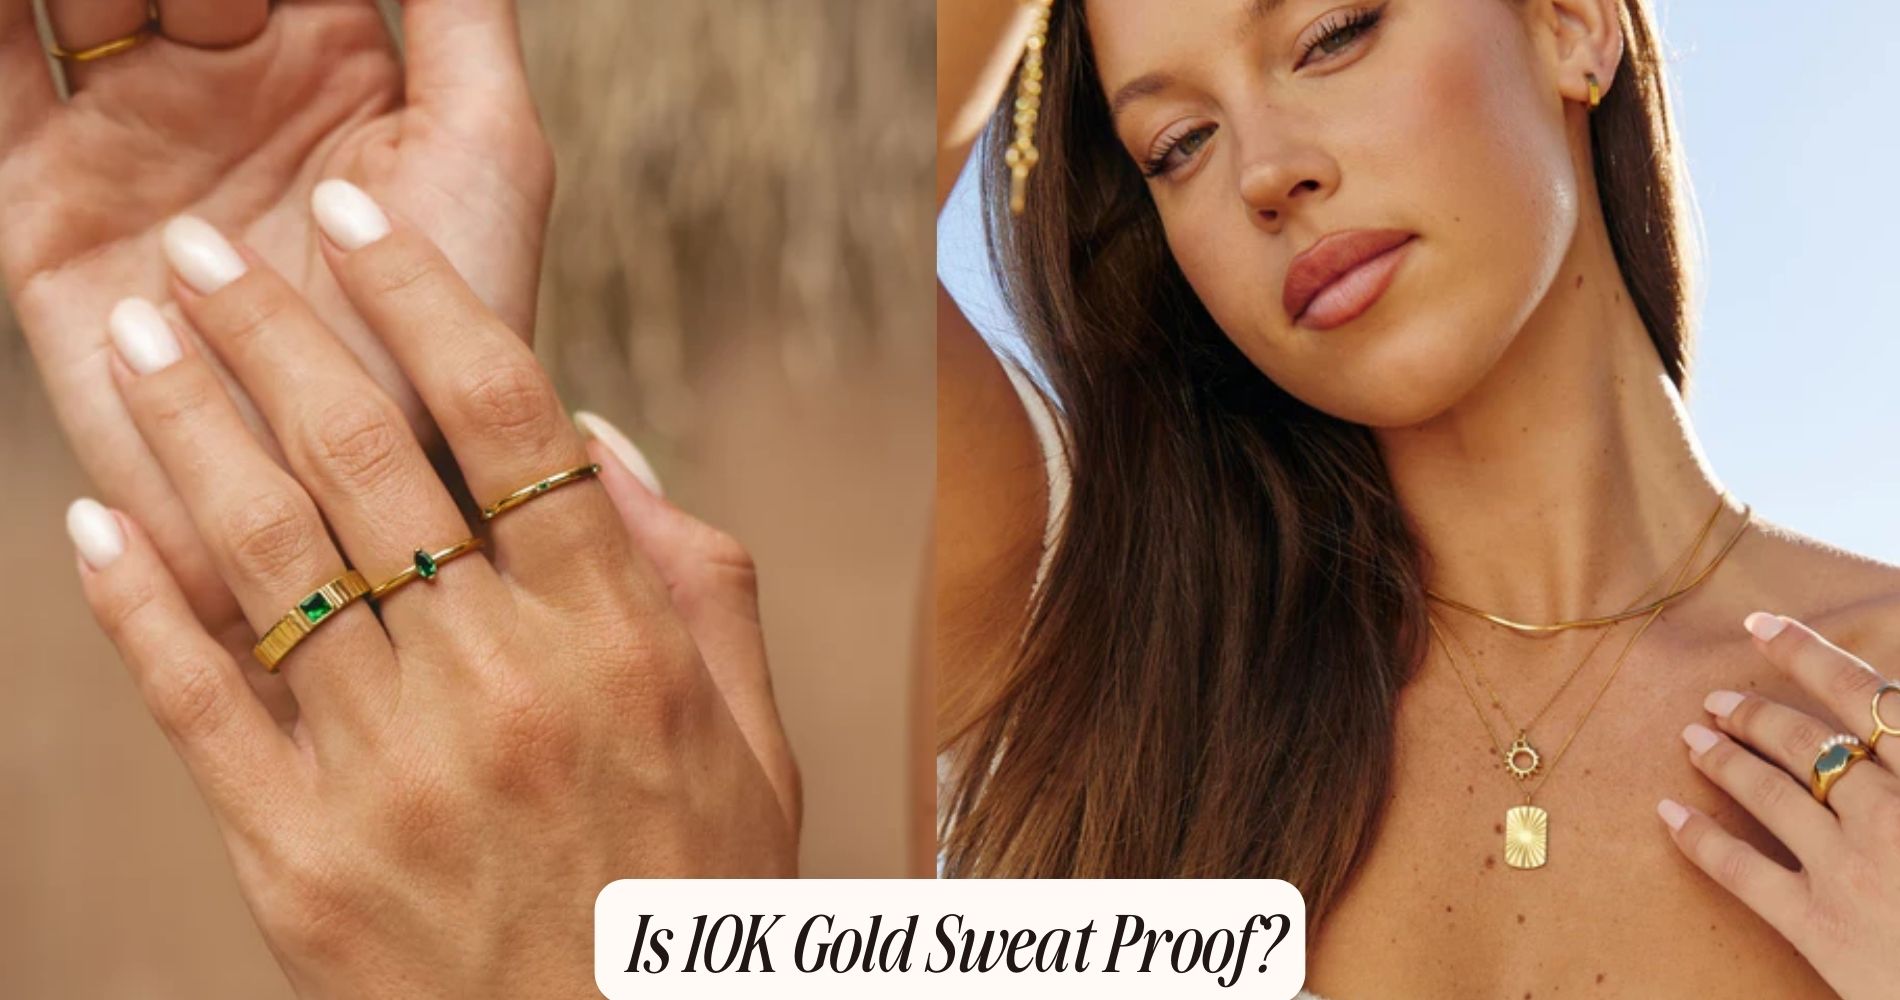 Is 10k gold sweat proof?